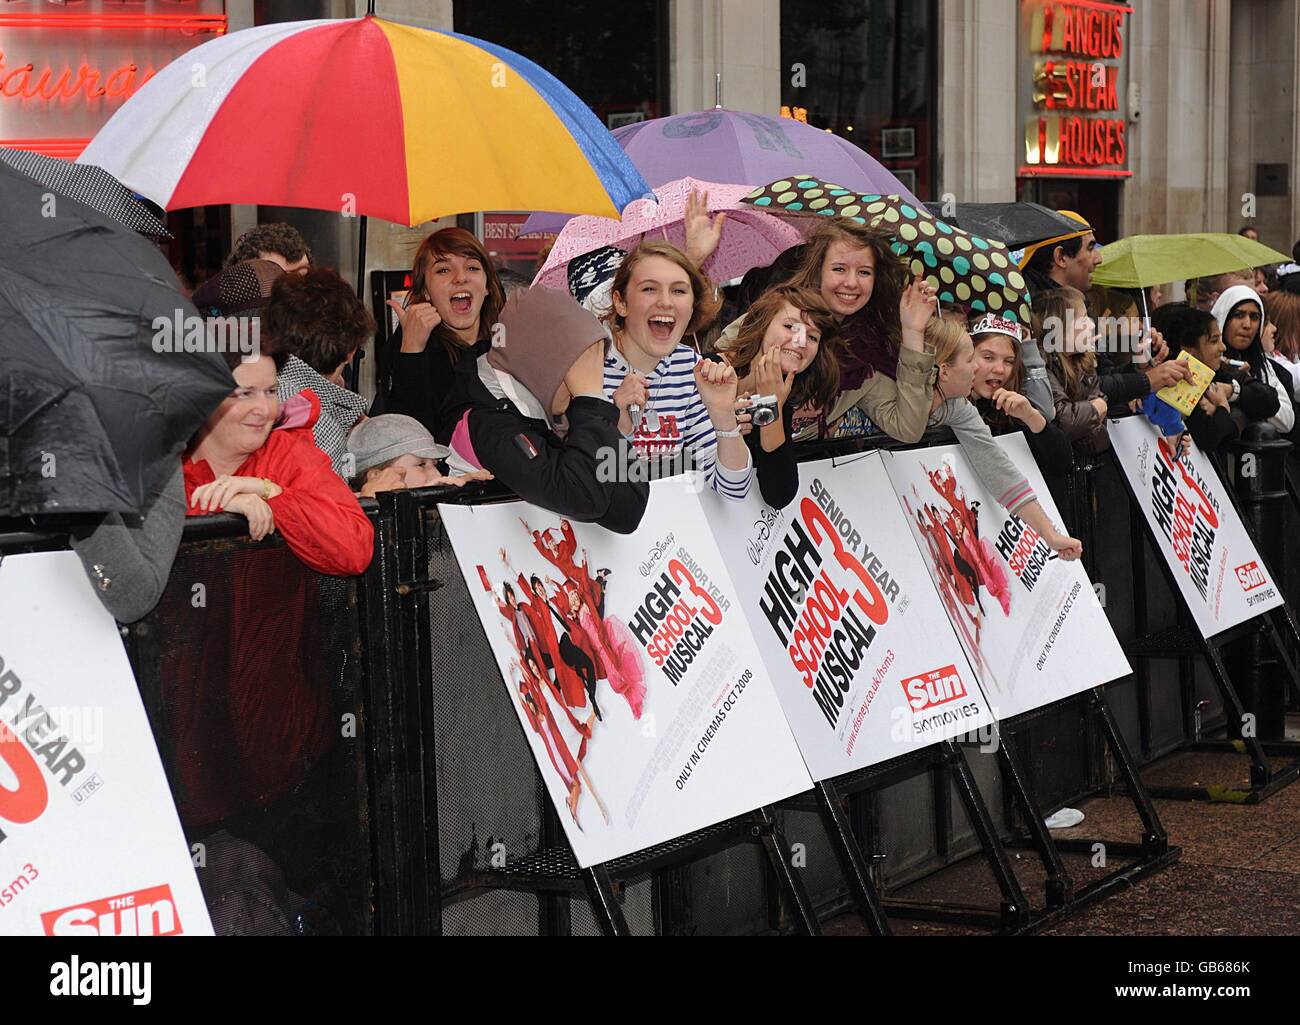 High School Musical 3 Premiere - London Stock Photo